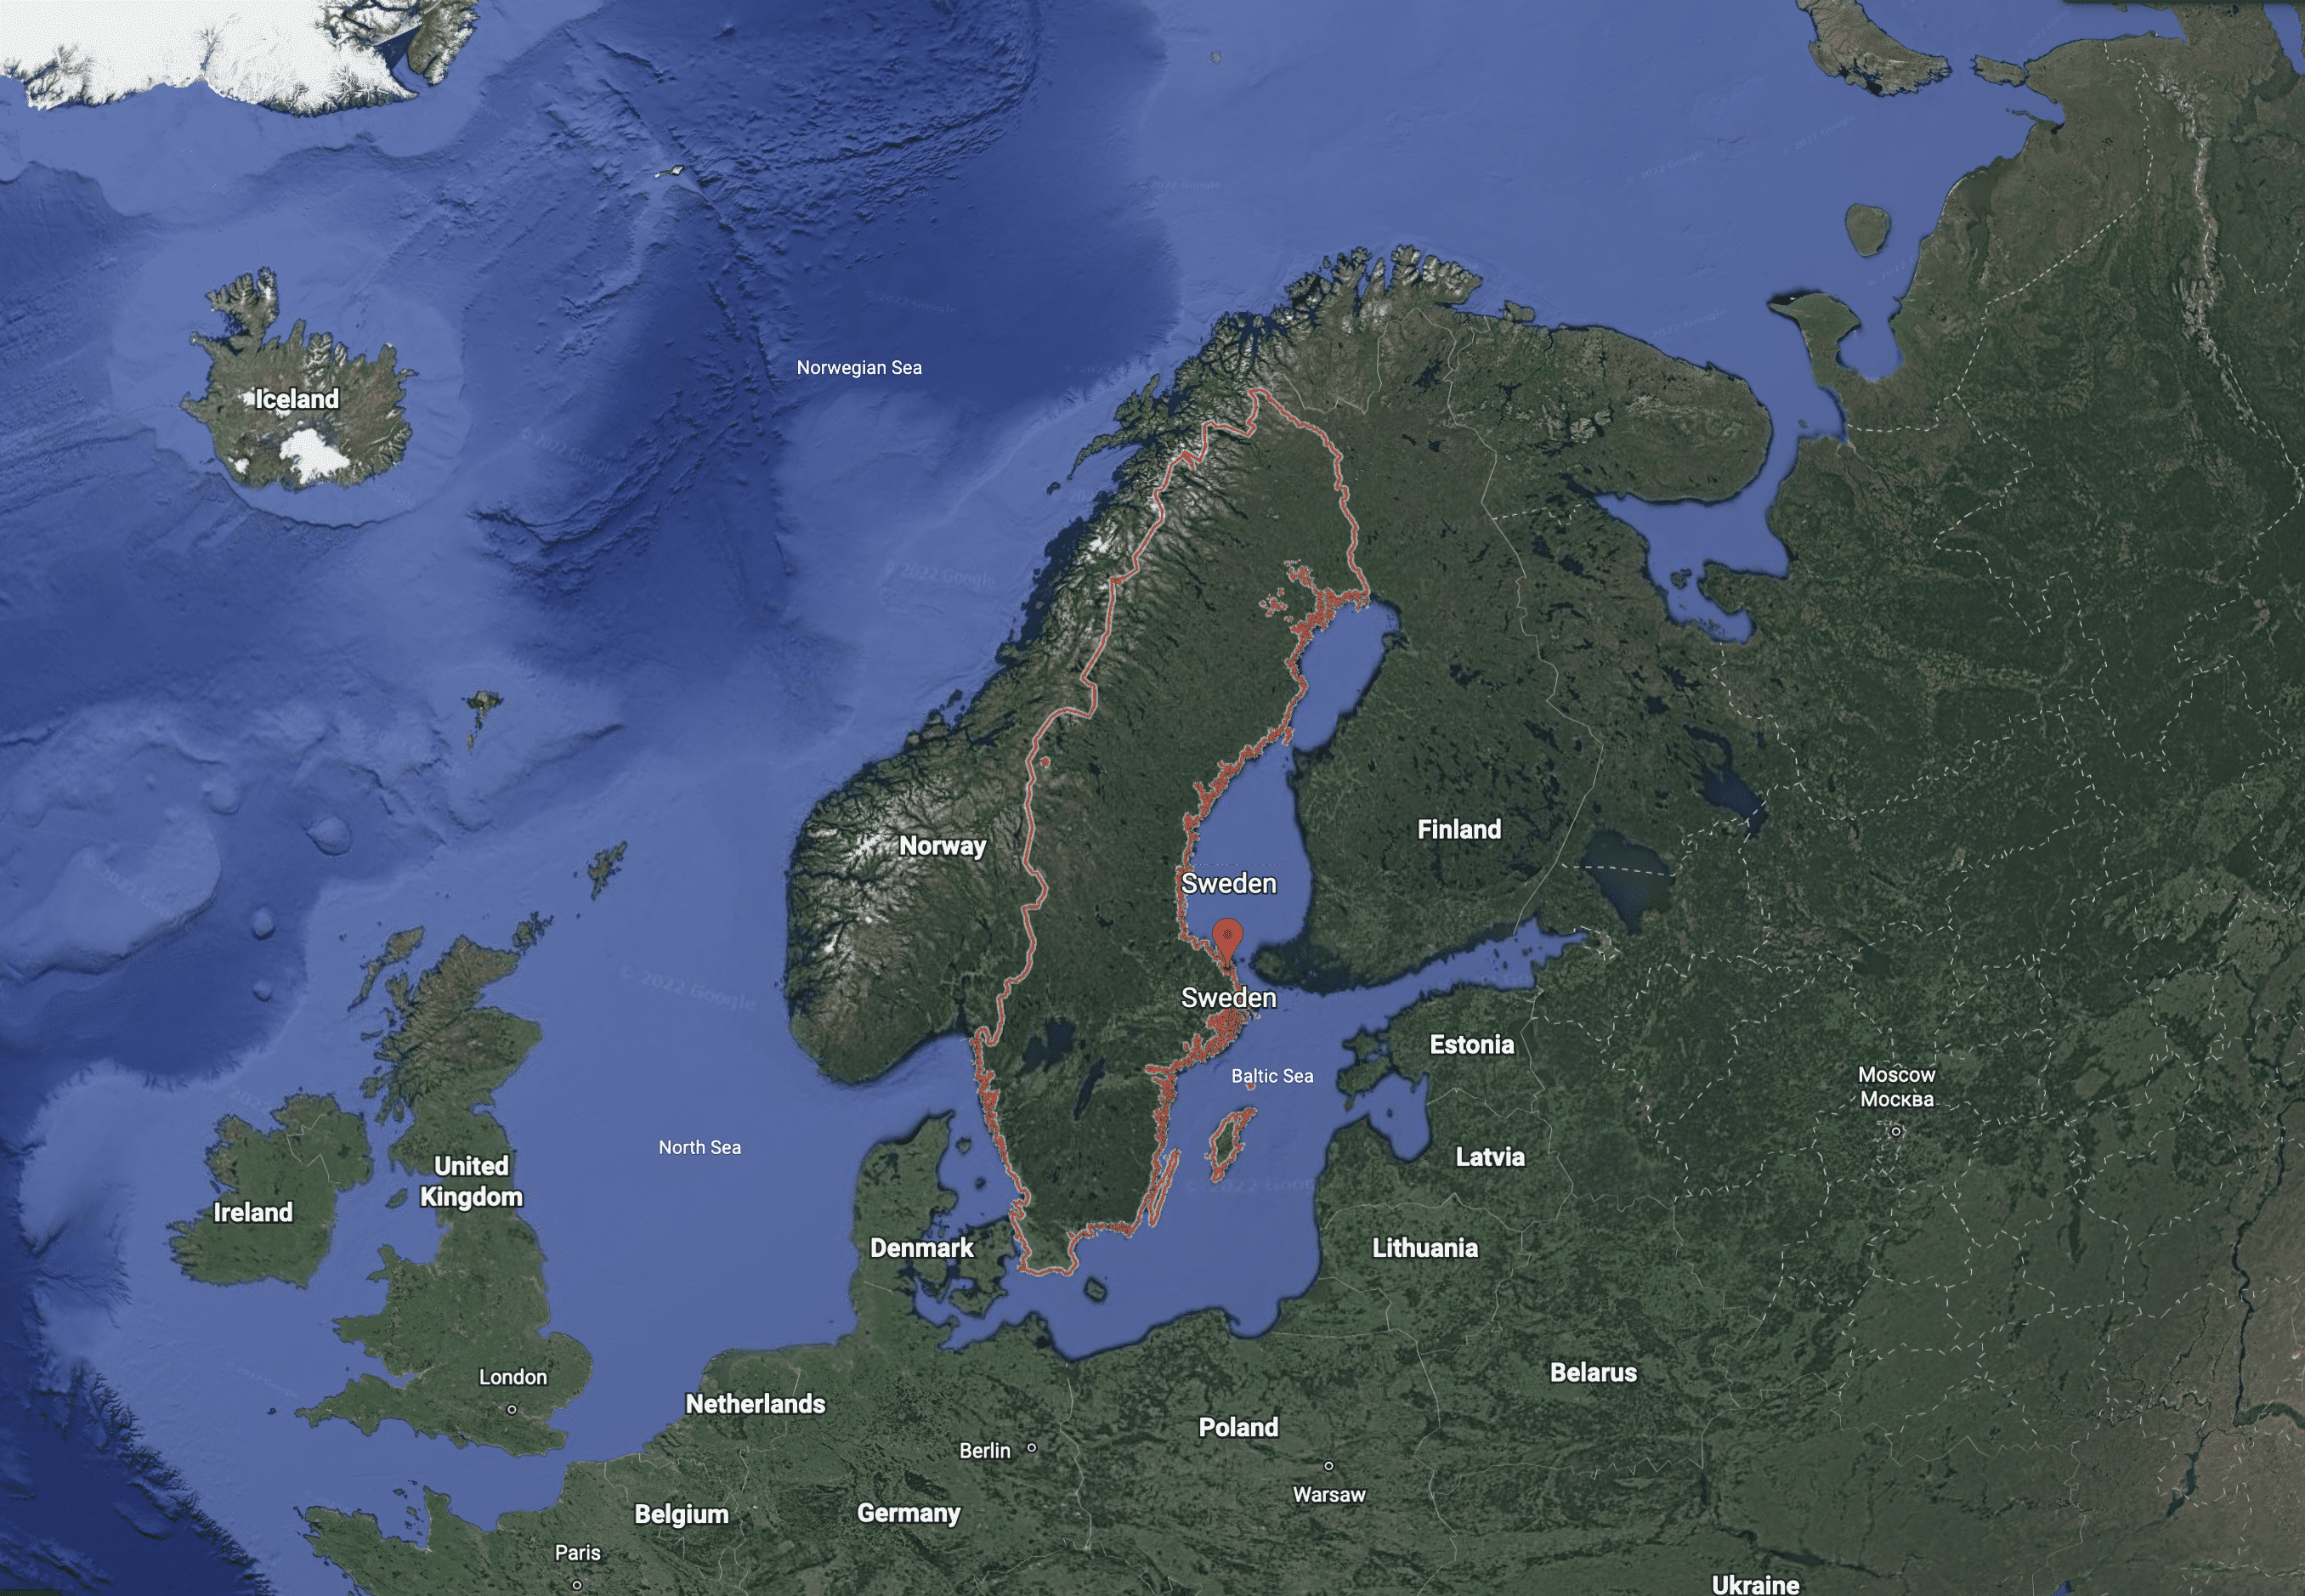 Google Earth Satellite Image of Sweden